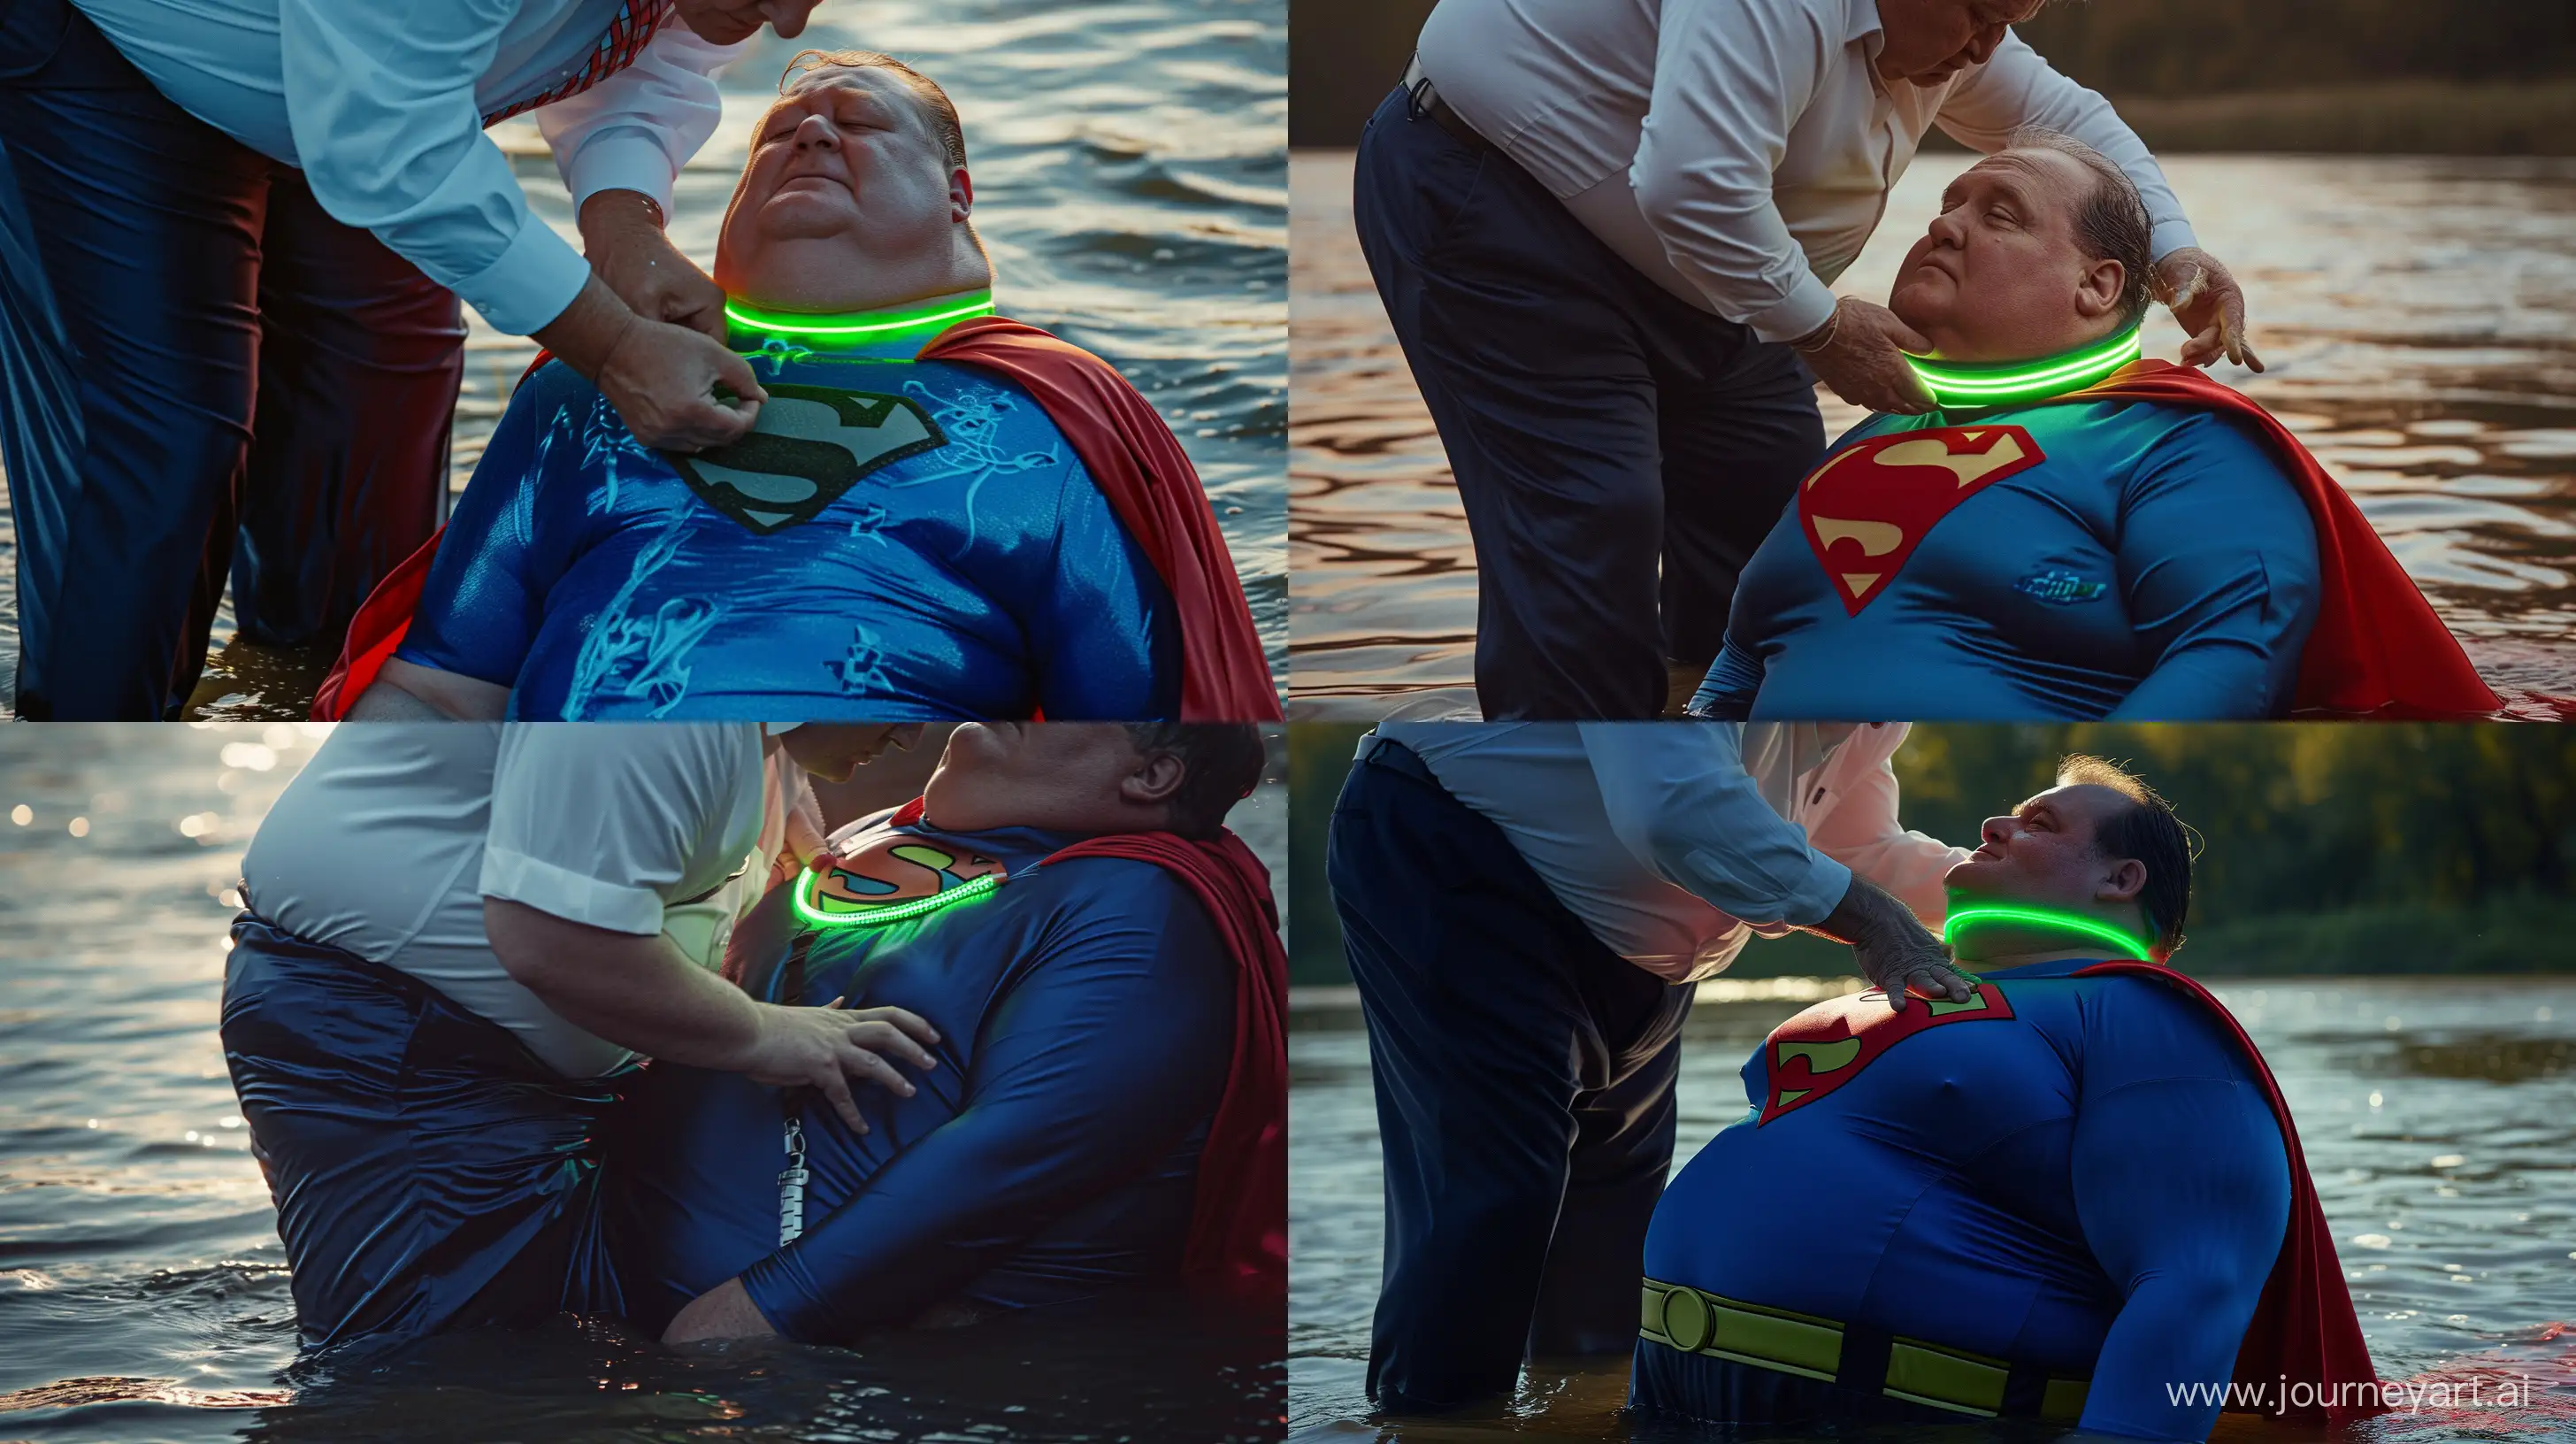 Eccentric-River-Scene-Senior-Superman-Gets-Glowing-Neon-Dog-Collar